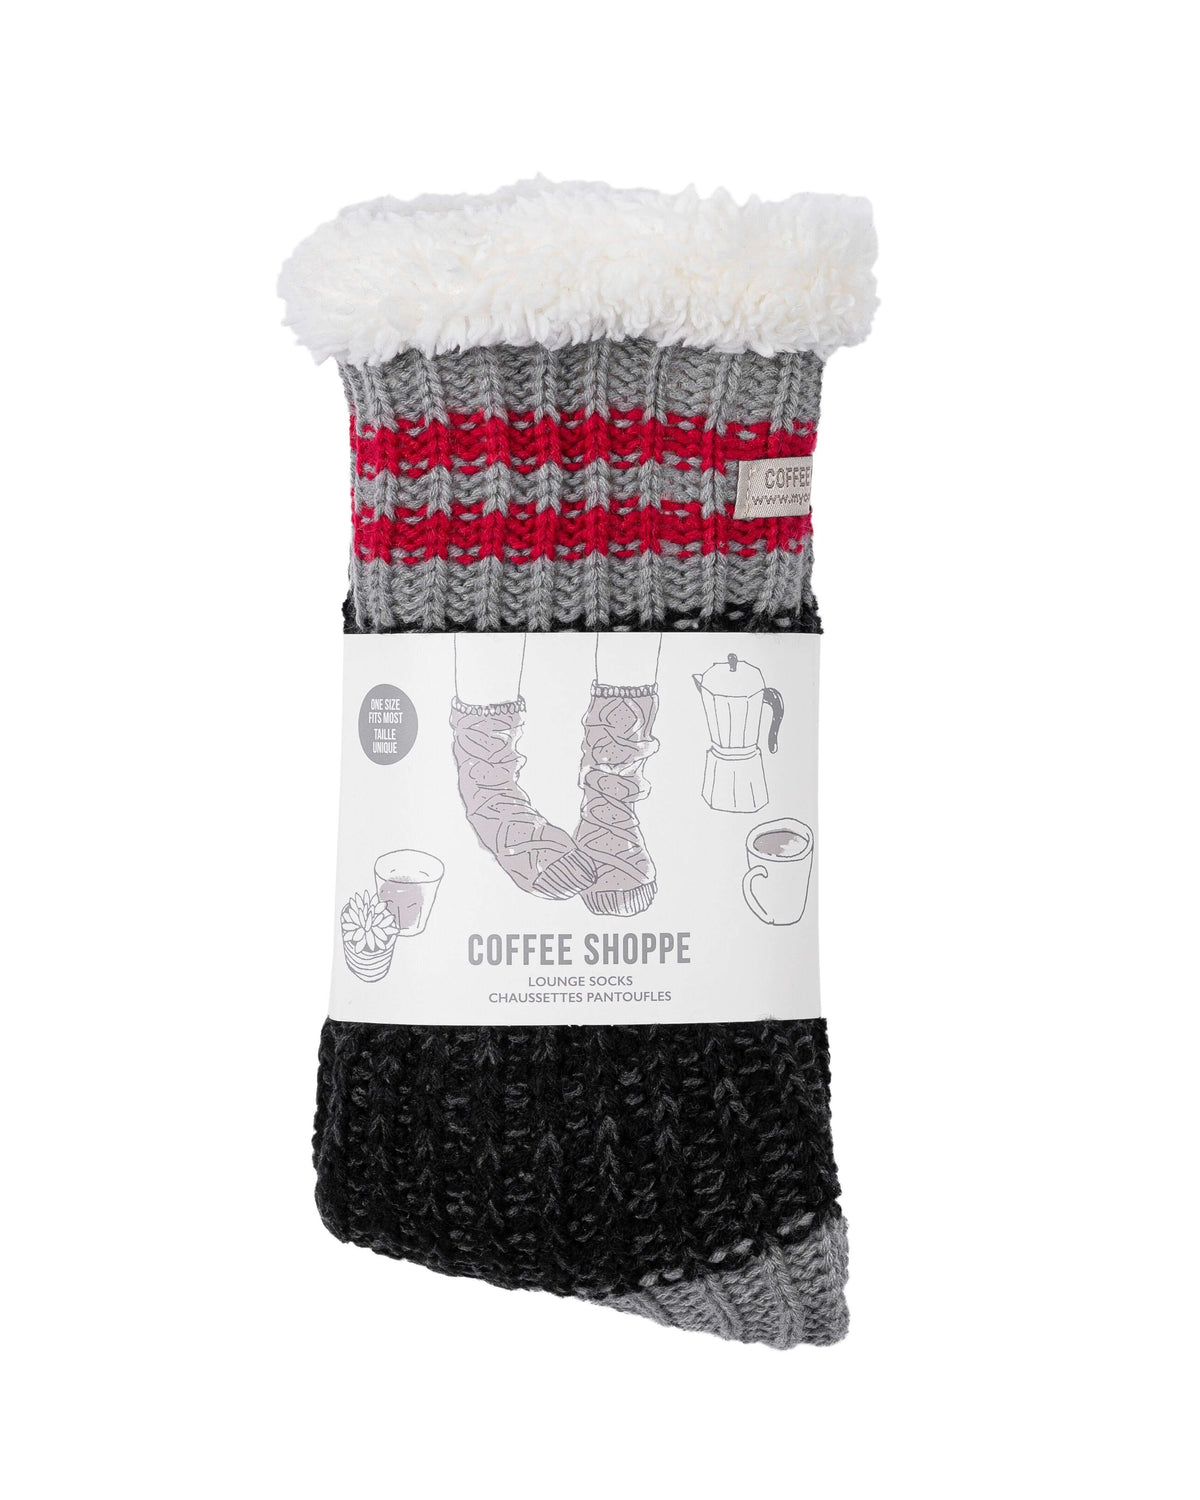 Canadiana Lounge Socks - Dark Smoked Pearl - LATTELOVE Co.